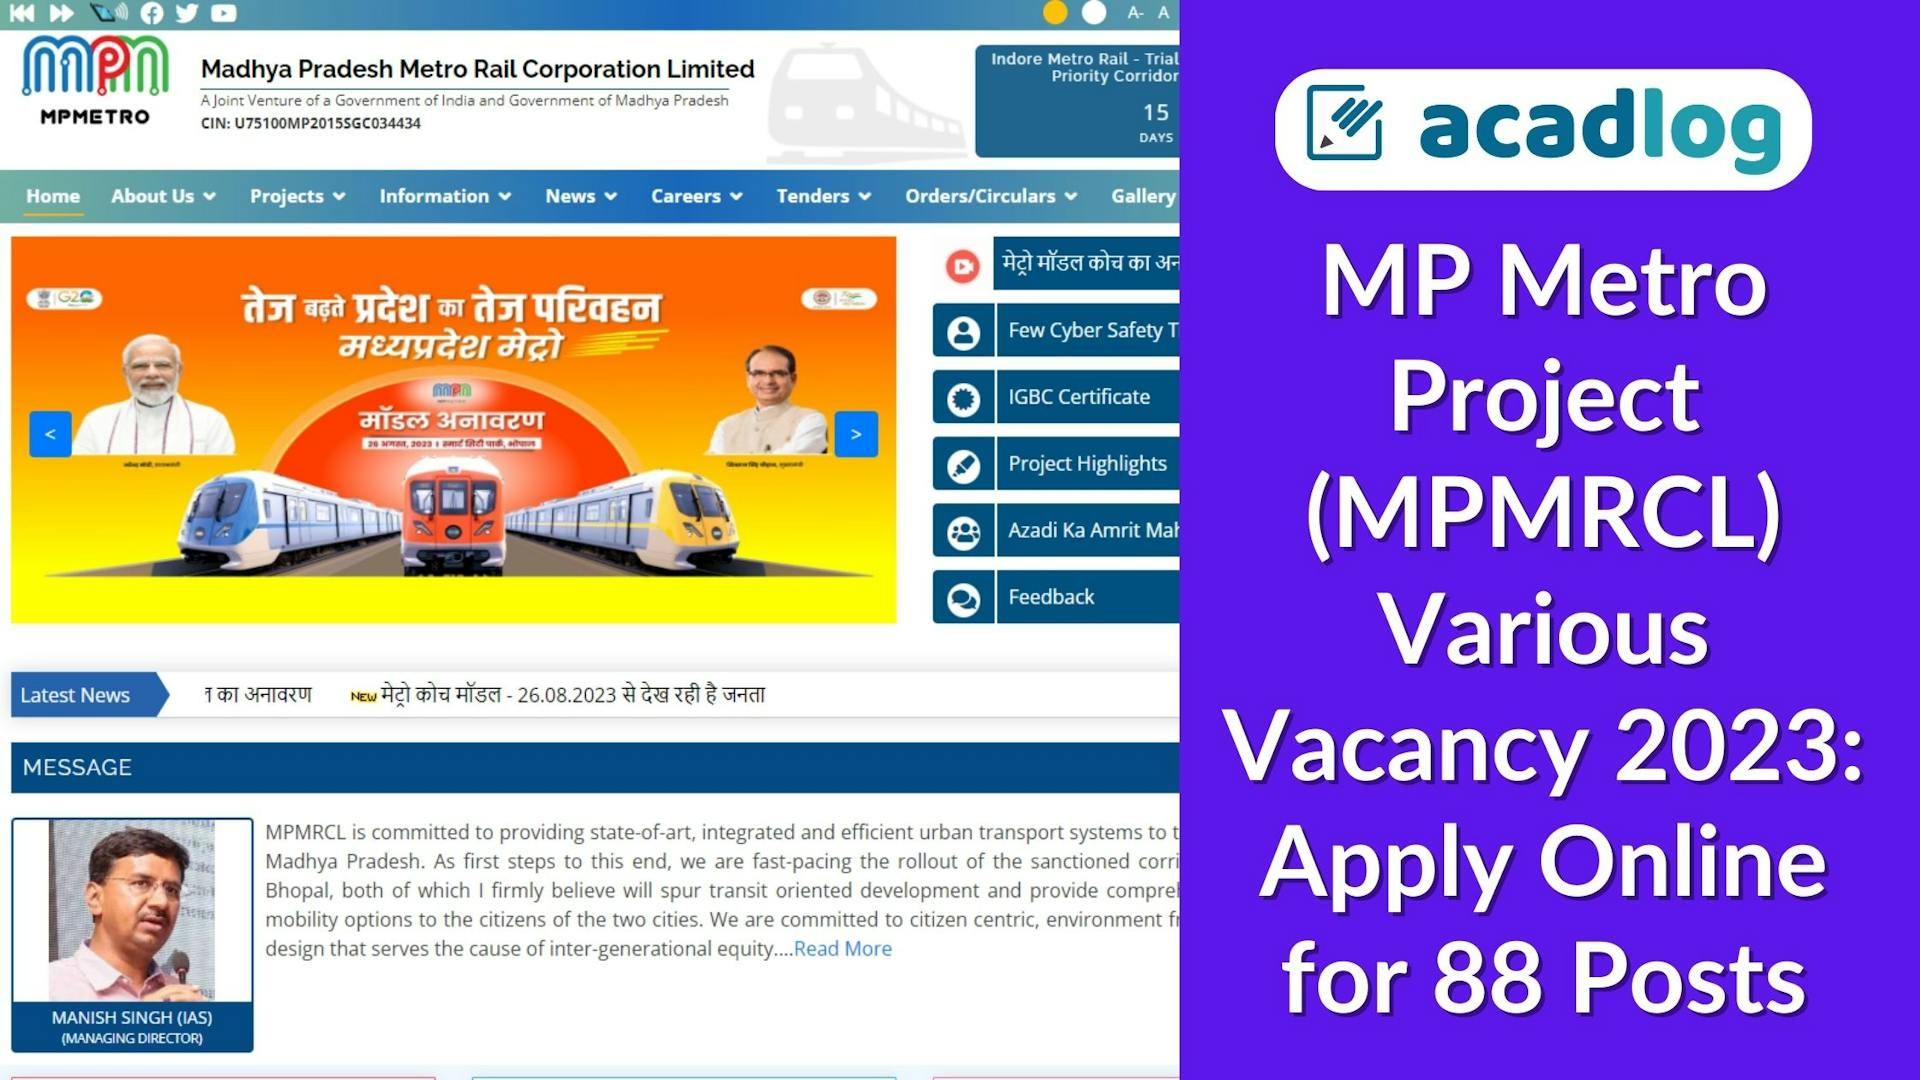 Acadlog: Madhya Pradesh Metro Rail Corporation Limited (MPMRCL) Various Post Recruitment 2023 Apply Online for 88 Post